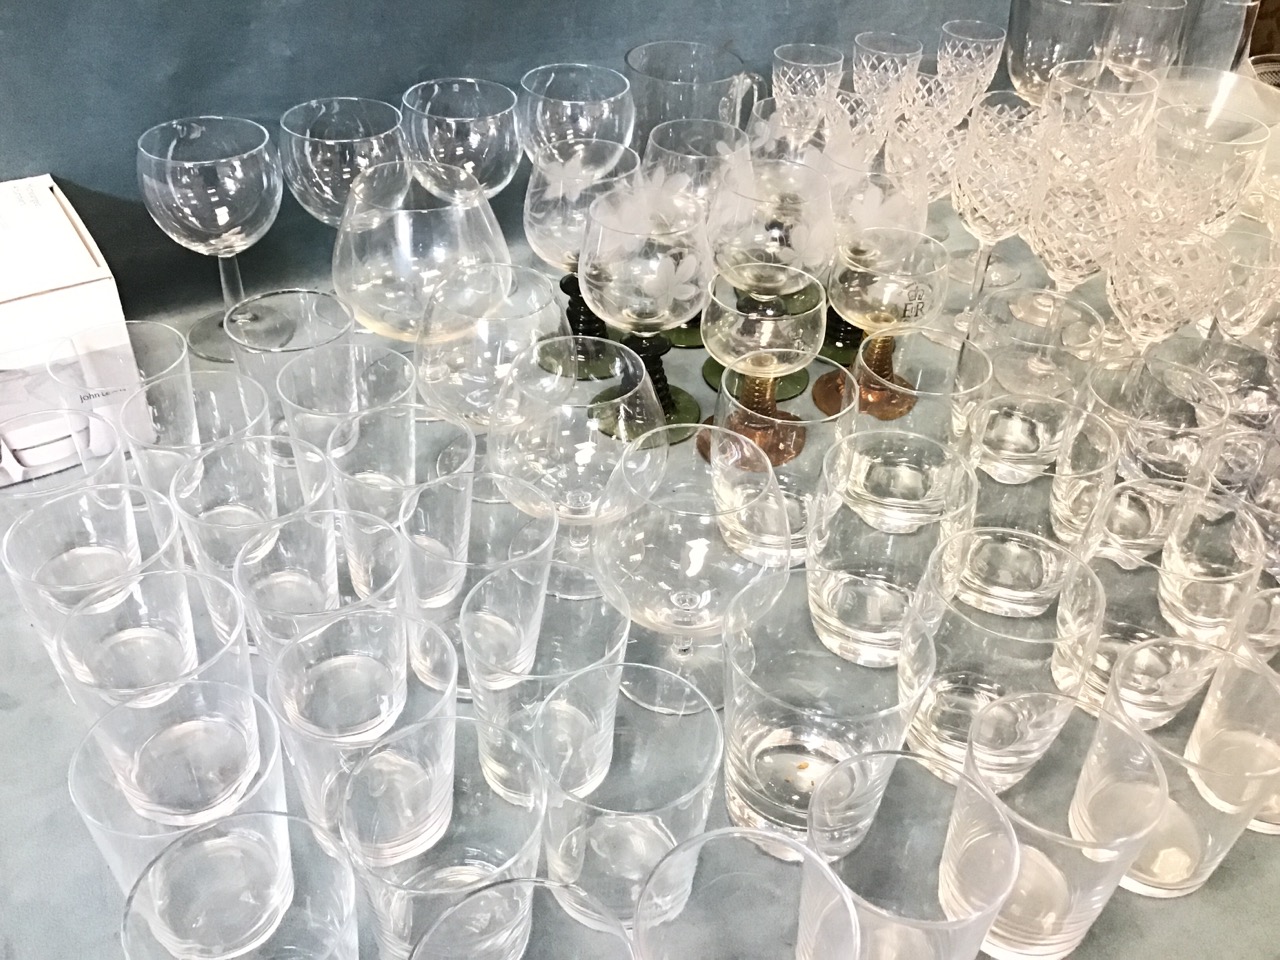 Miscellaneous glasses including sets of Edinburgh cut crystal, brandy balloons, tumblers, wine - Bild 3 aus 3